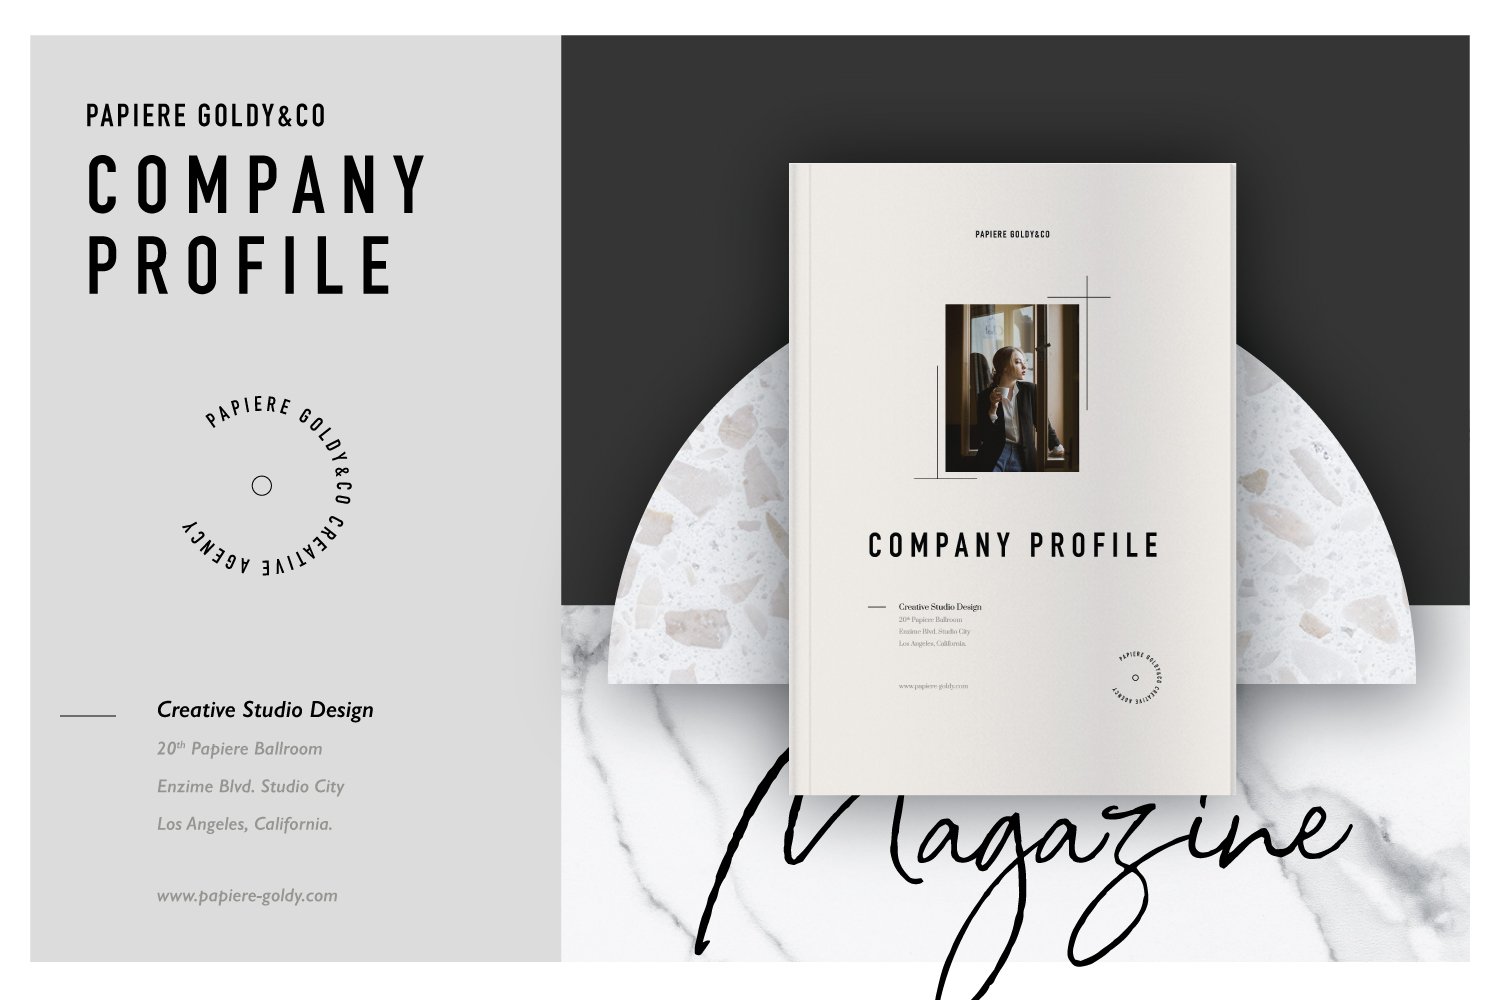 Papiere Goldy & Co. Company Profile